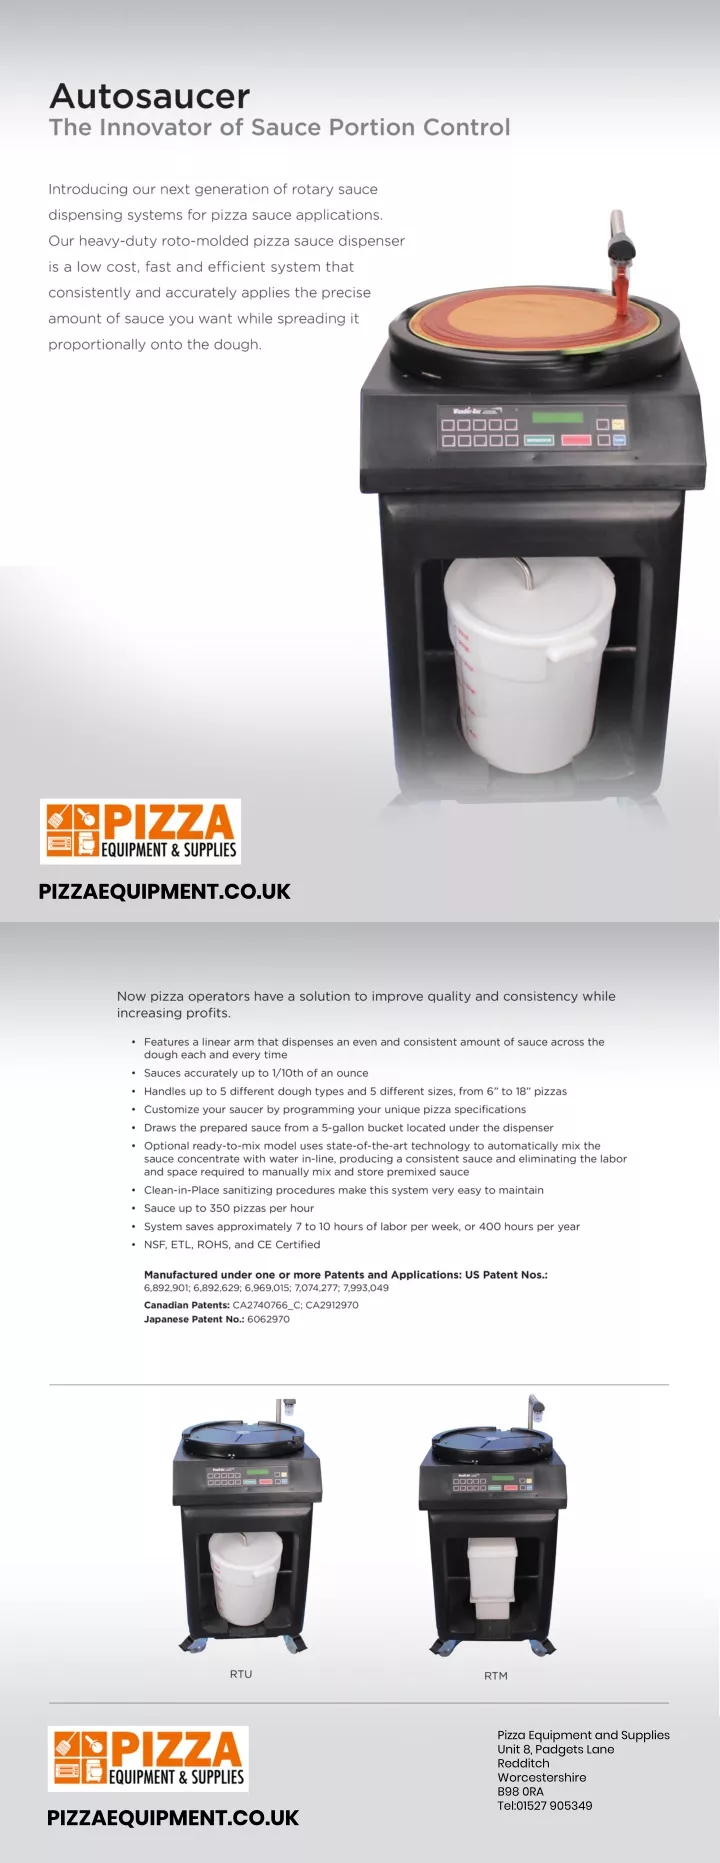 pizzaequipment co uk